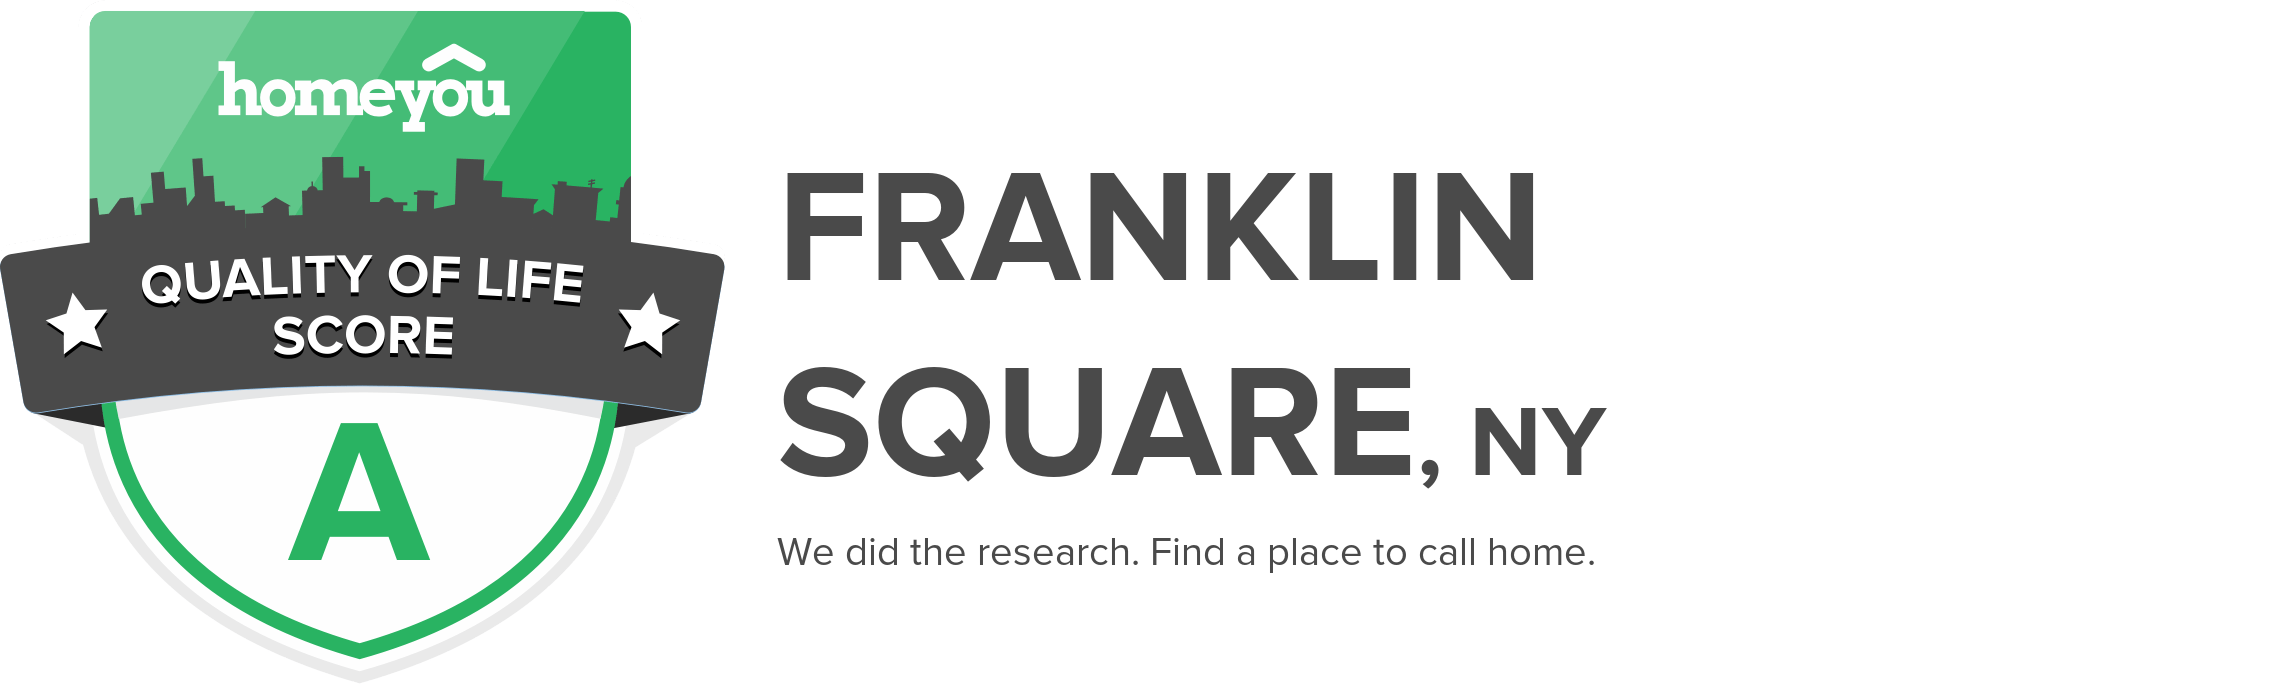 Franklin Square, NY